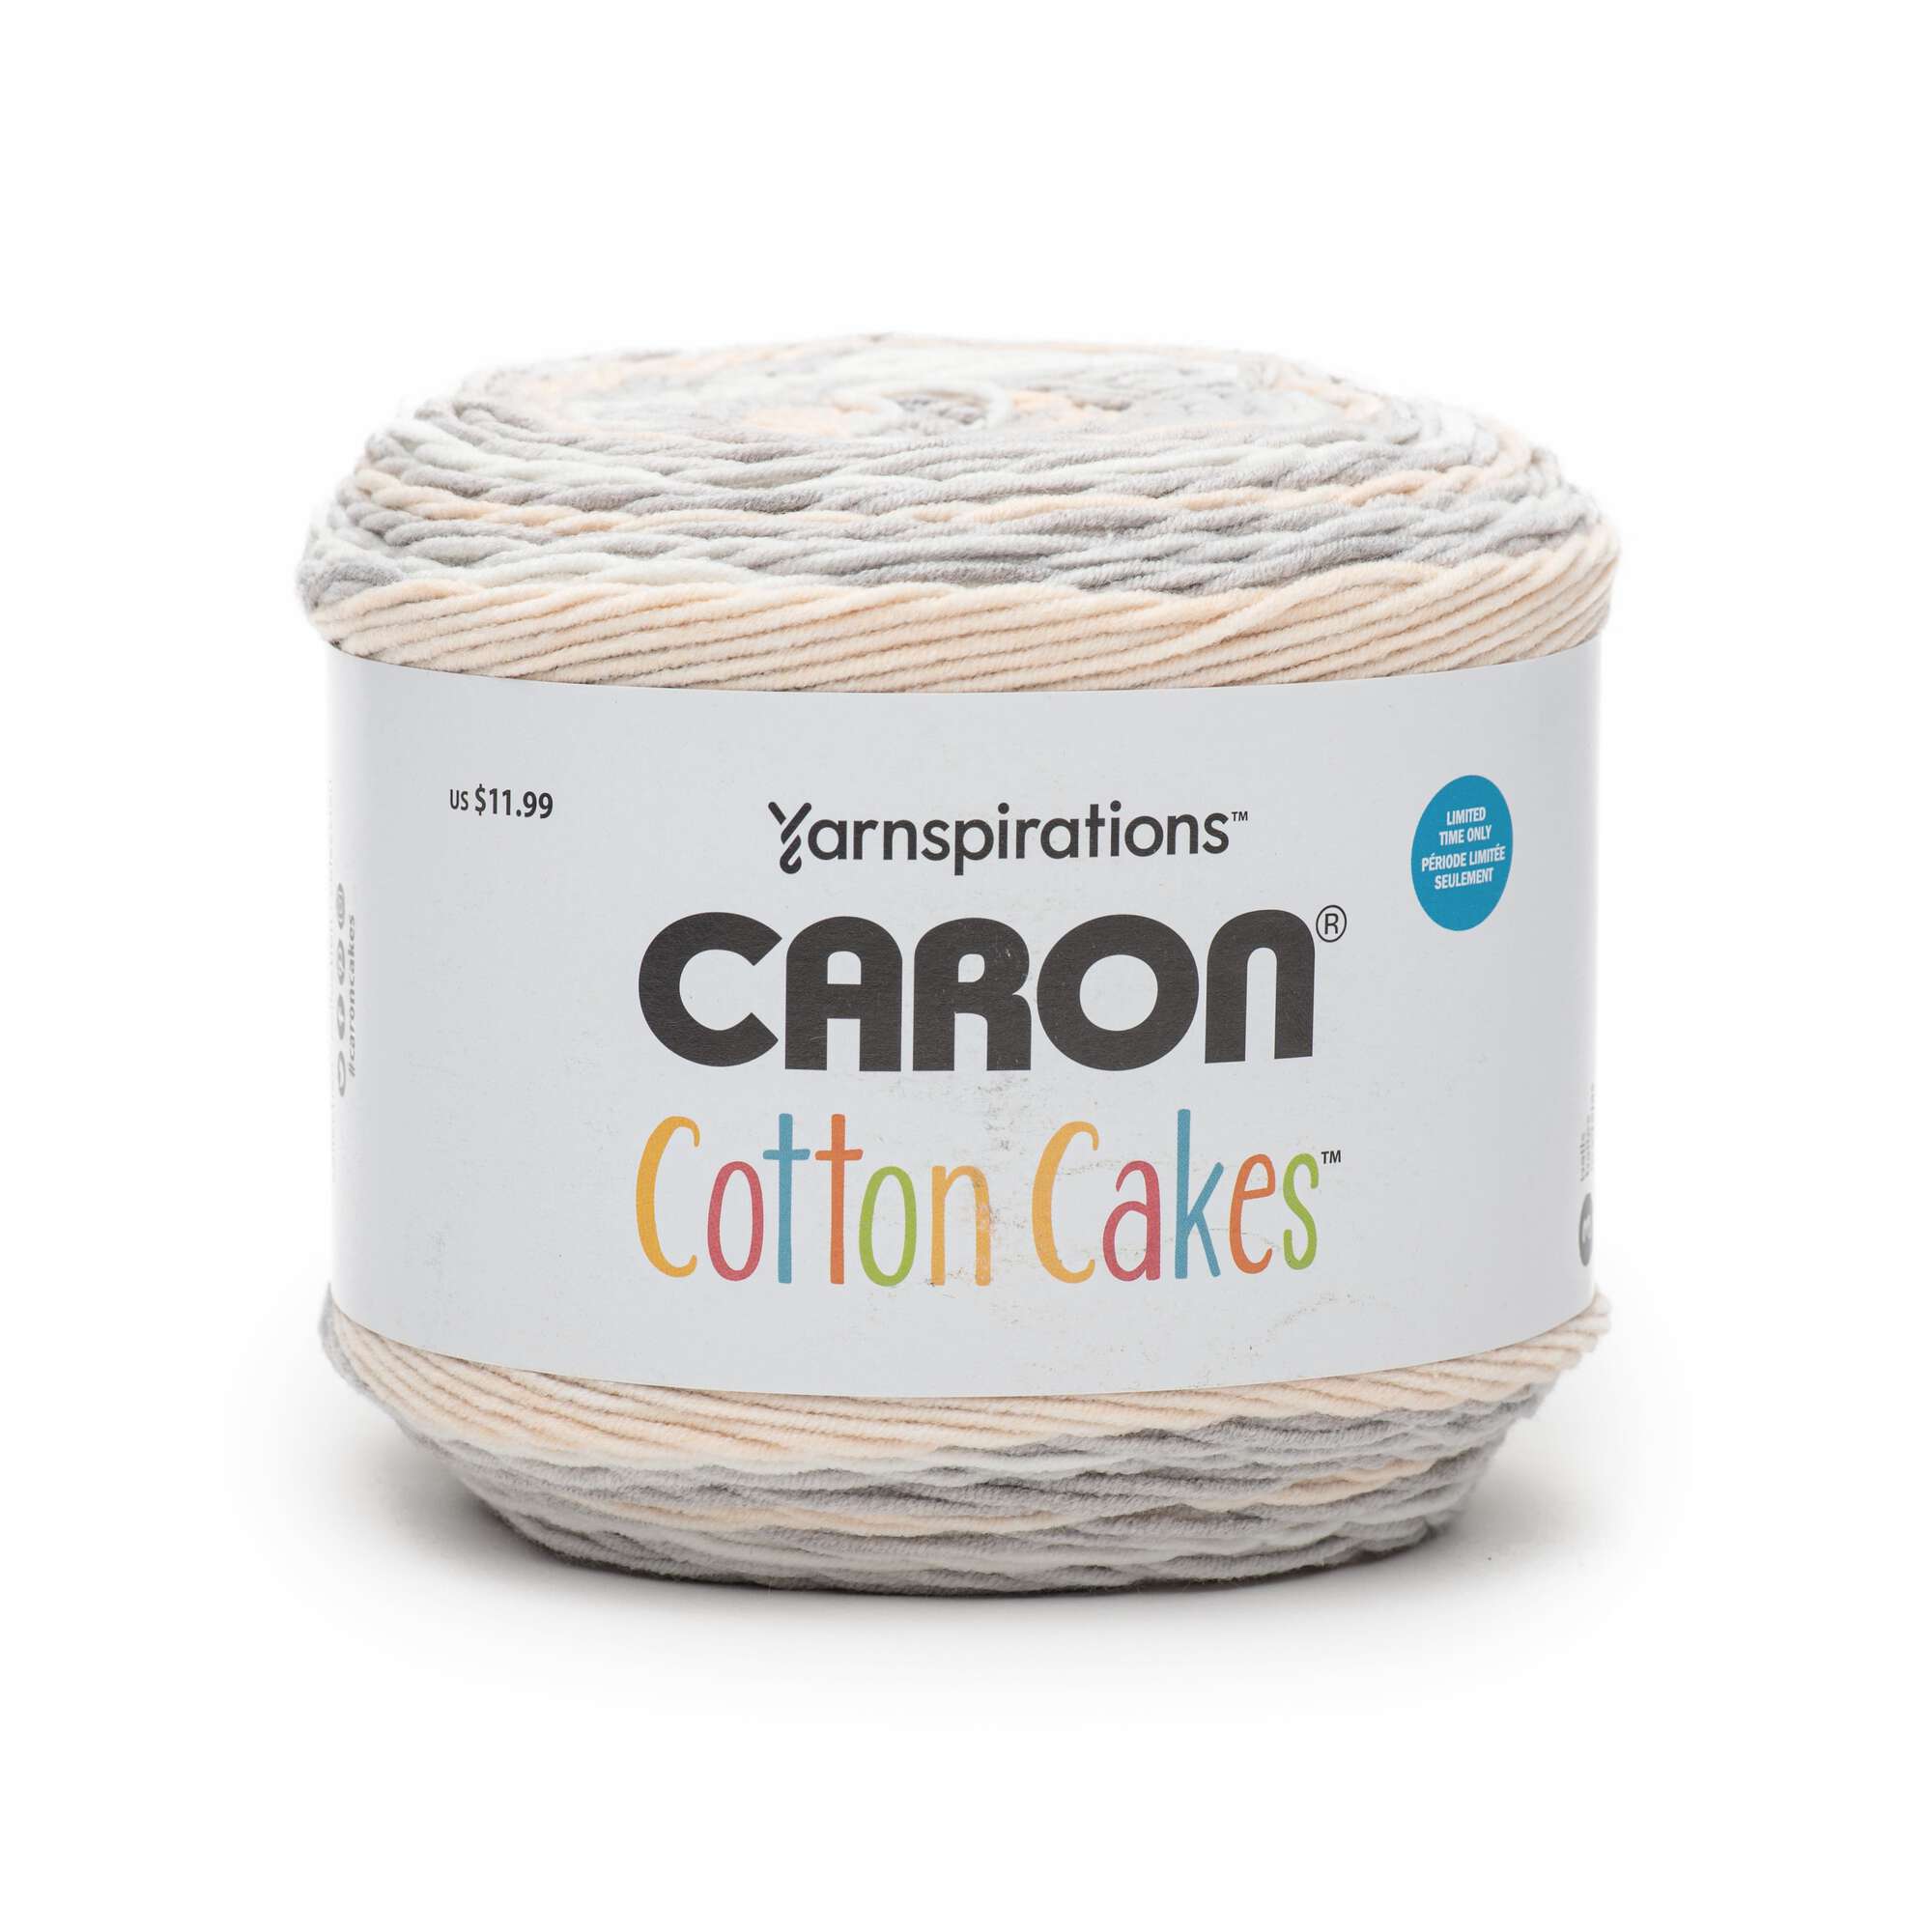 Caron Cotton Cakes Yarn (500g/17.7oz) - Clearance Shades*